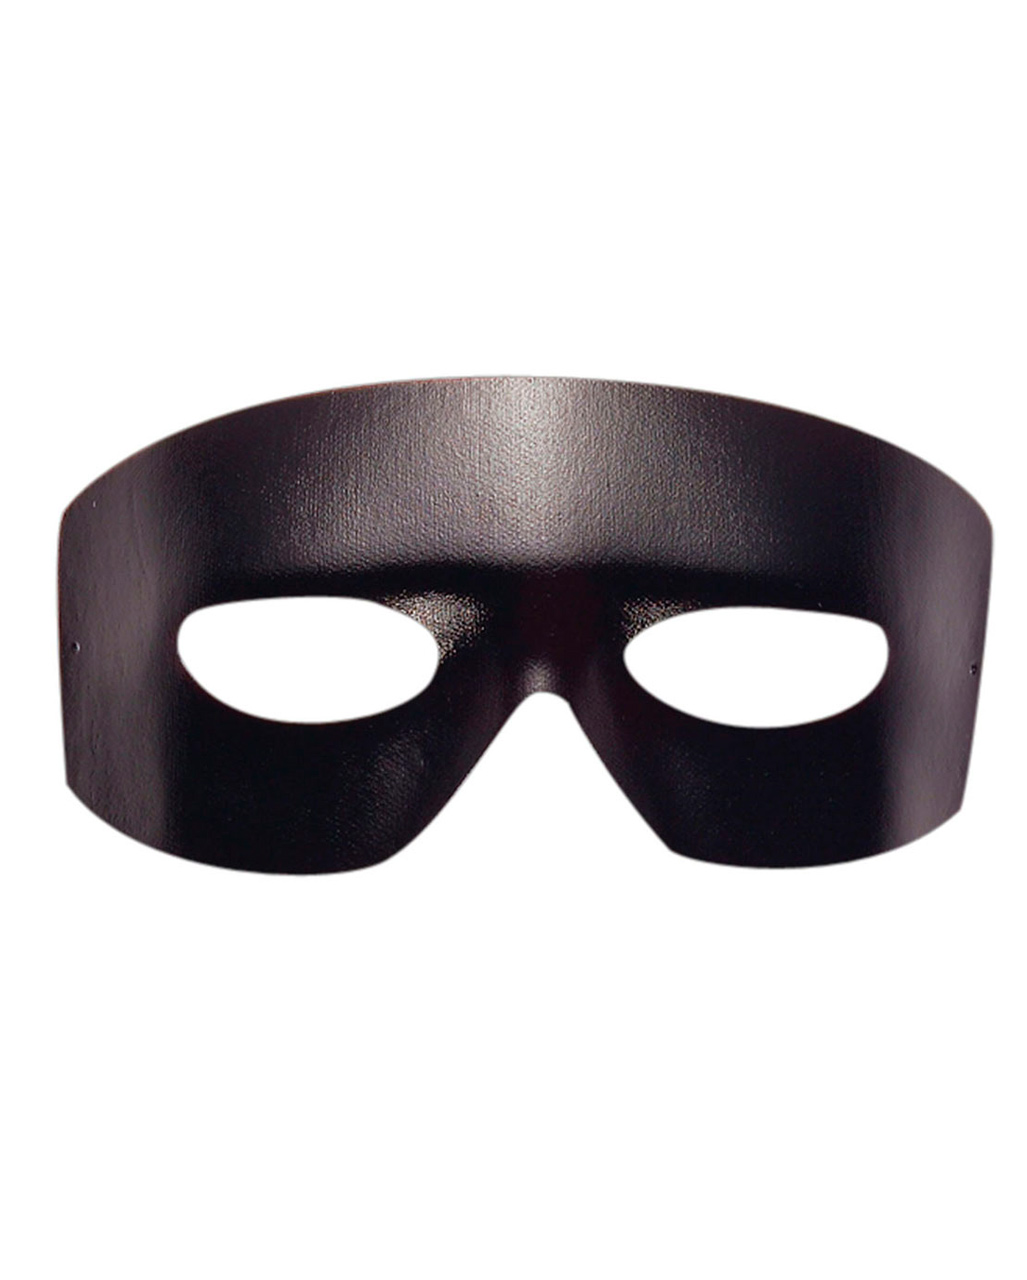 Zorro Mask In Leather Look Caballero eye mask | horror-shop.com